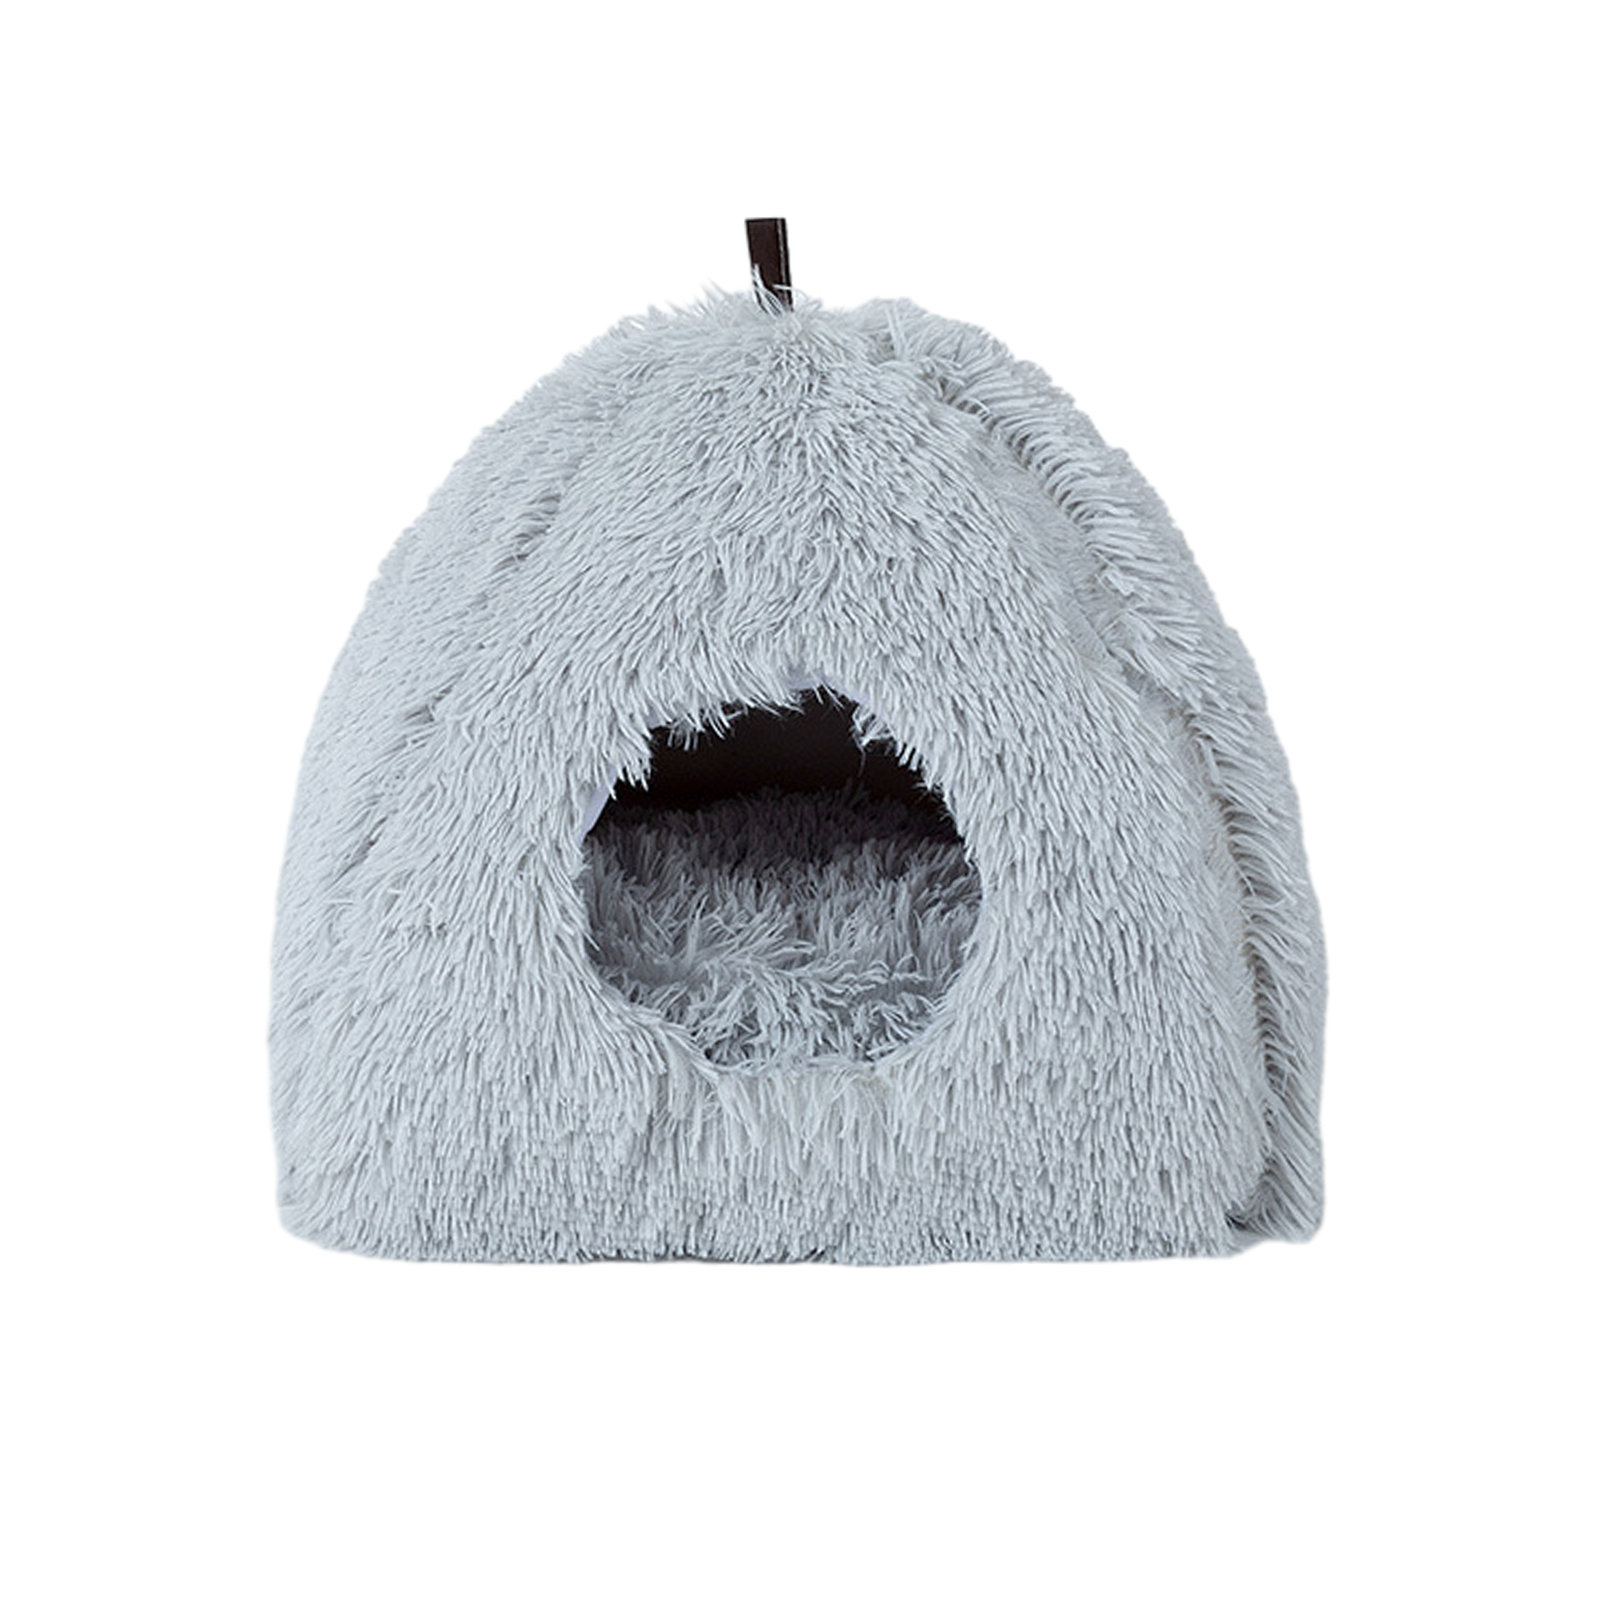 Cat House For Indoor Dogs Cats Soft Plush Premium Sponge Pet Tent For Puppies Rabbits Guinea Pigs Hedgehogs